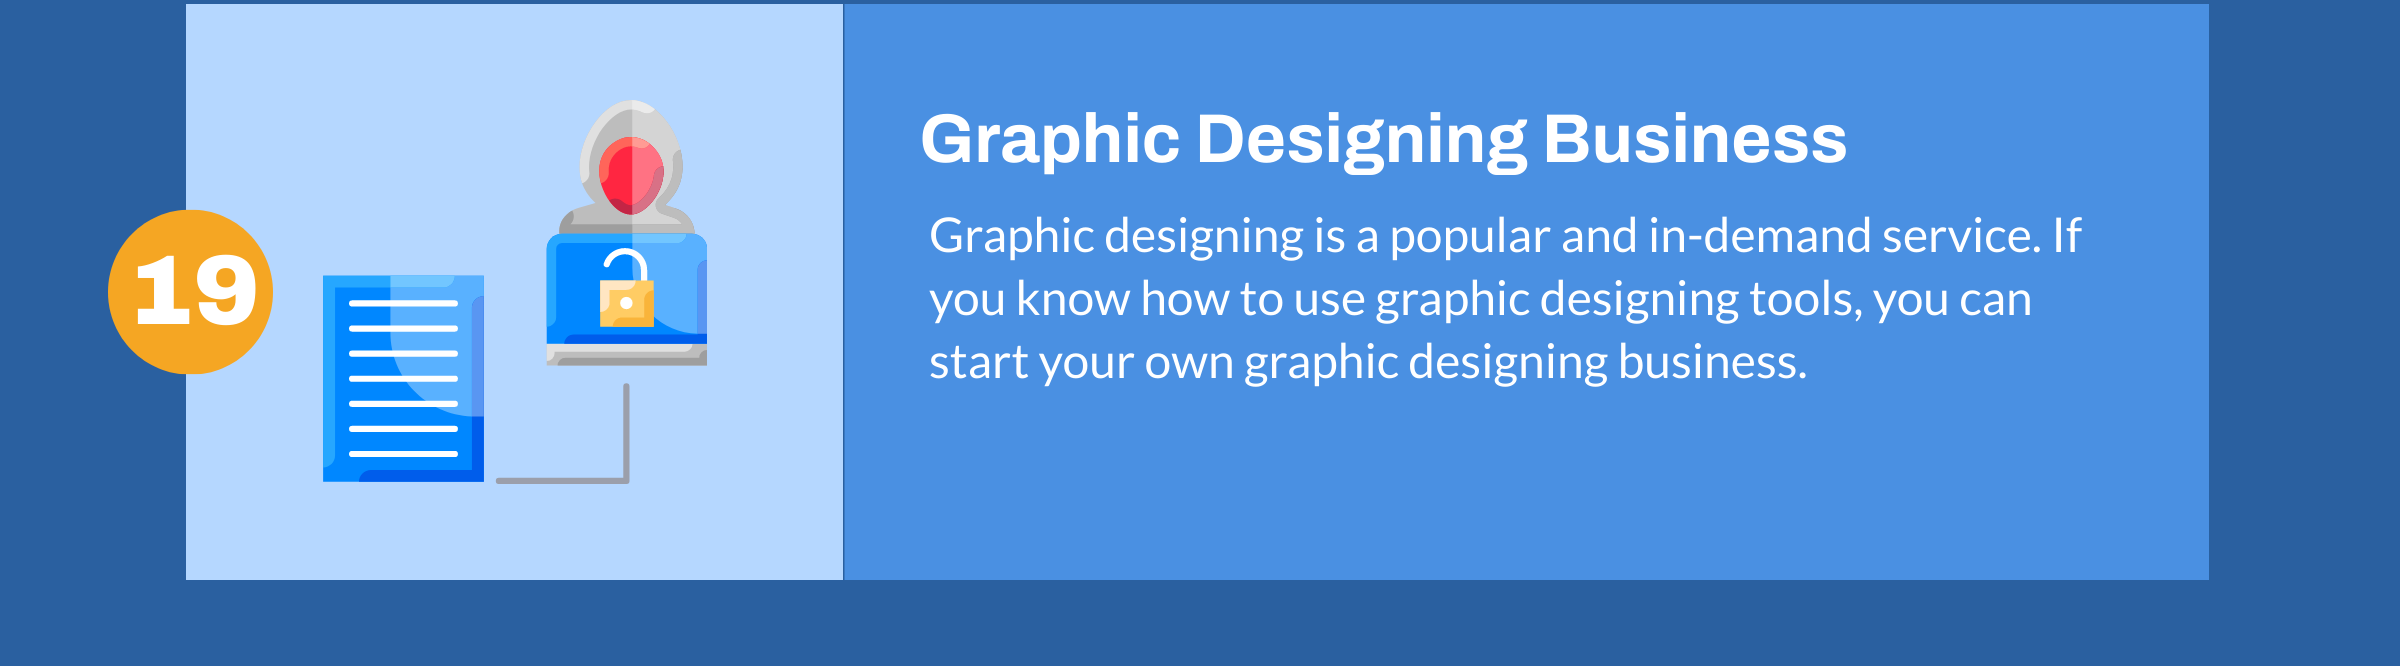 Graphics Designing Business